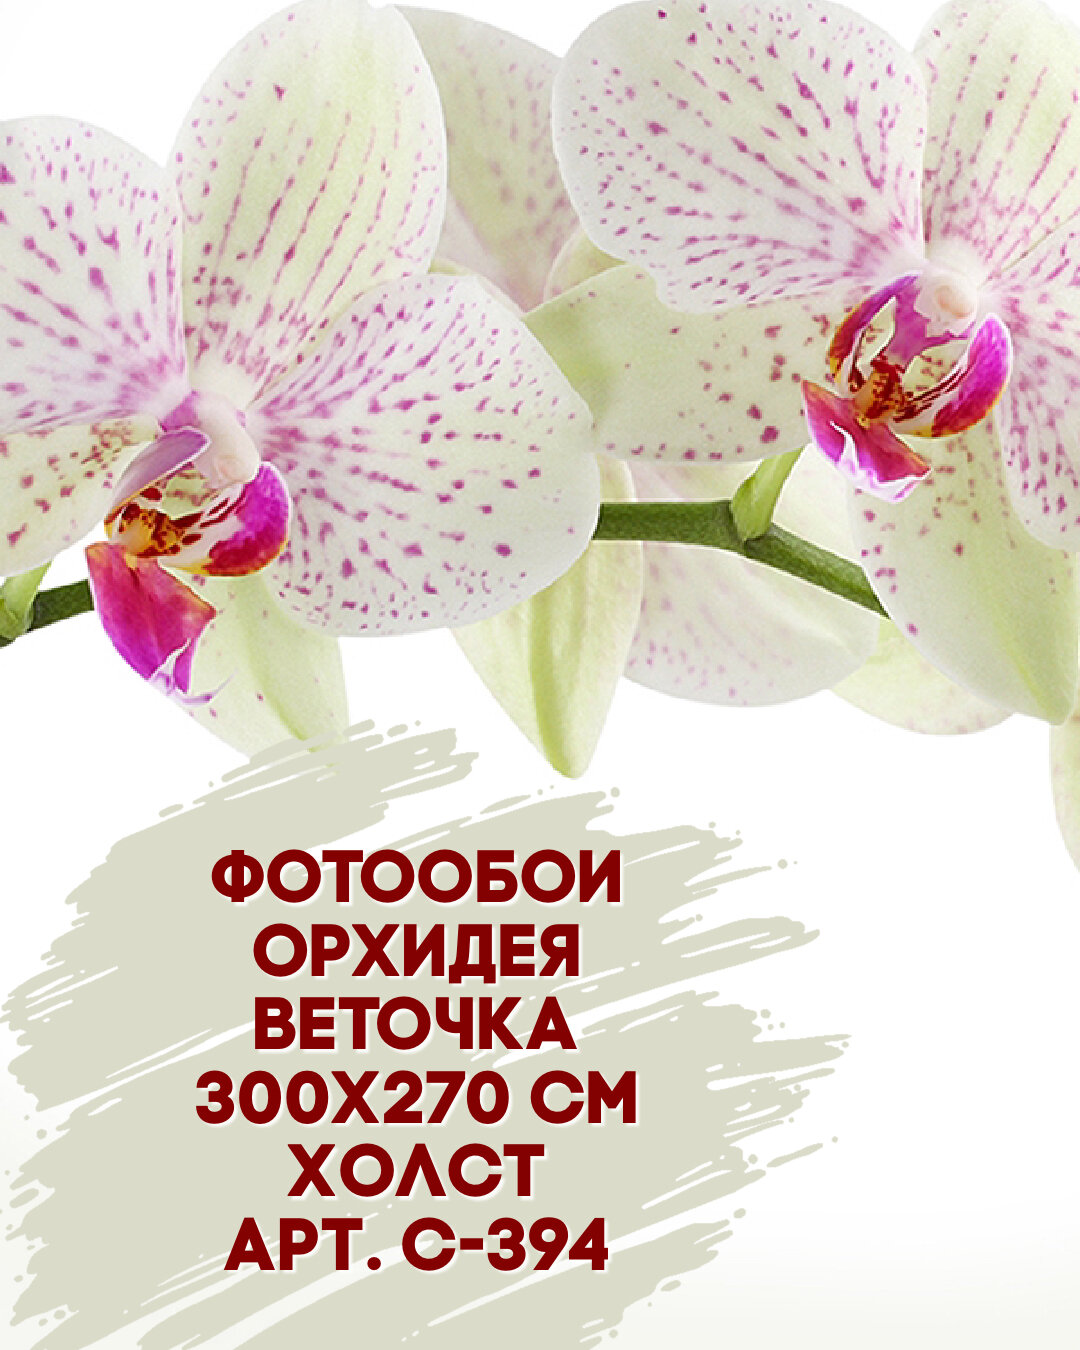 Фотообои DIVINO Орхидея веточка 300х270 холст